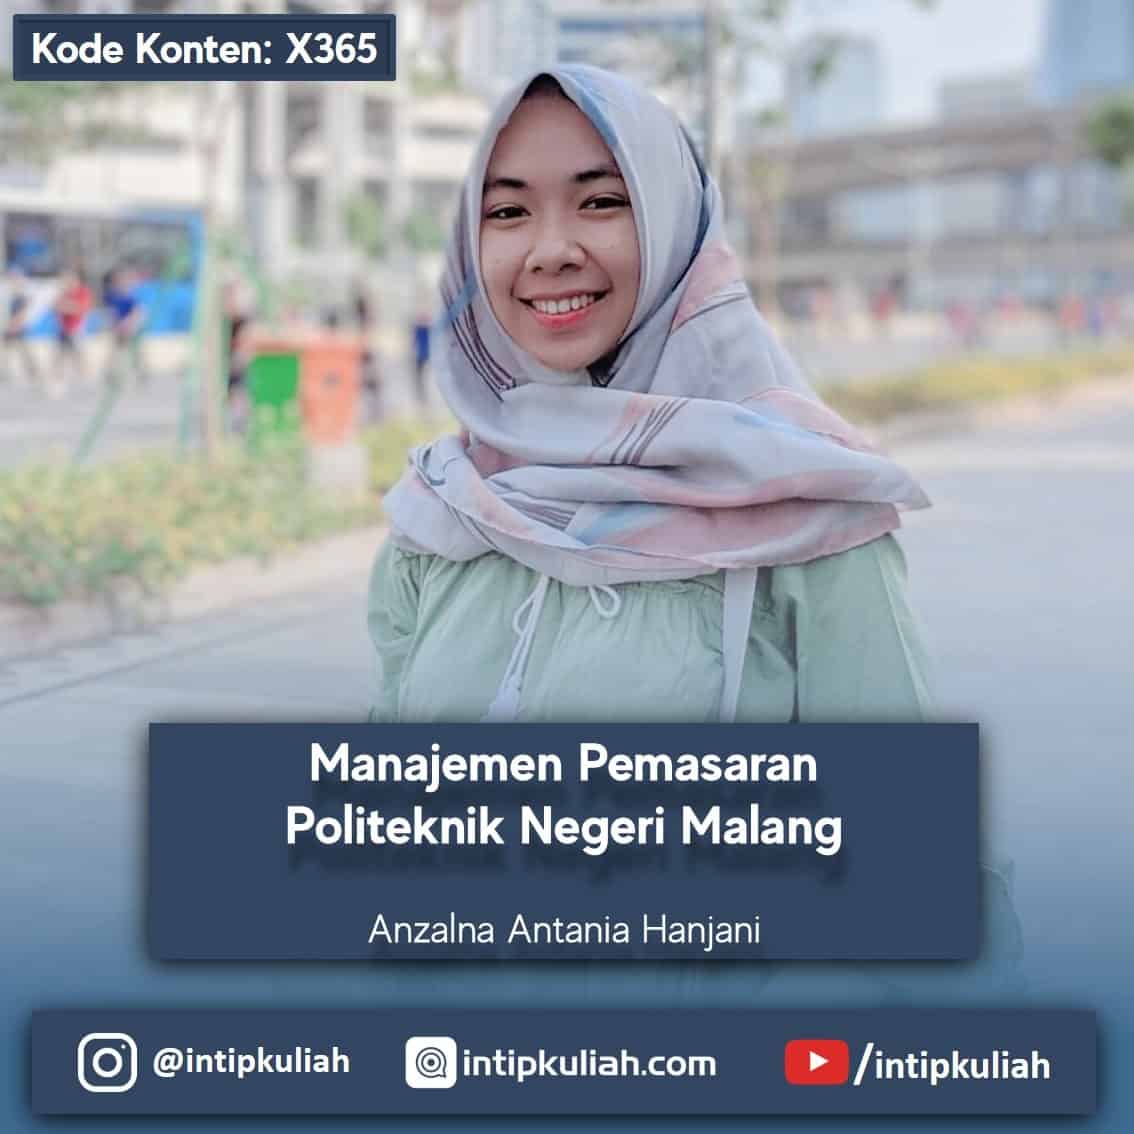 Manajemen Pemasaran Politeknik Negeri Malang (Antania)